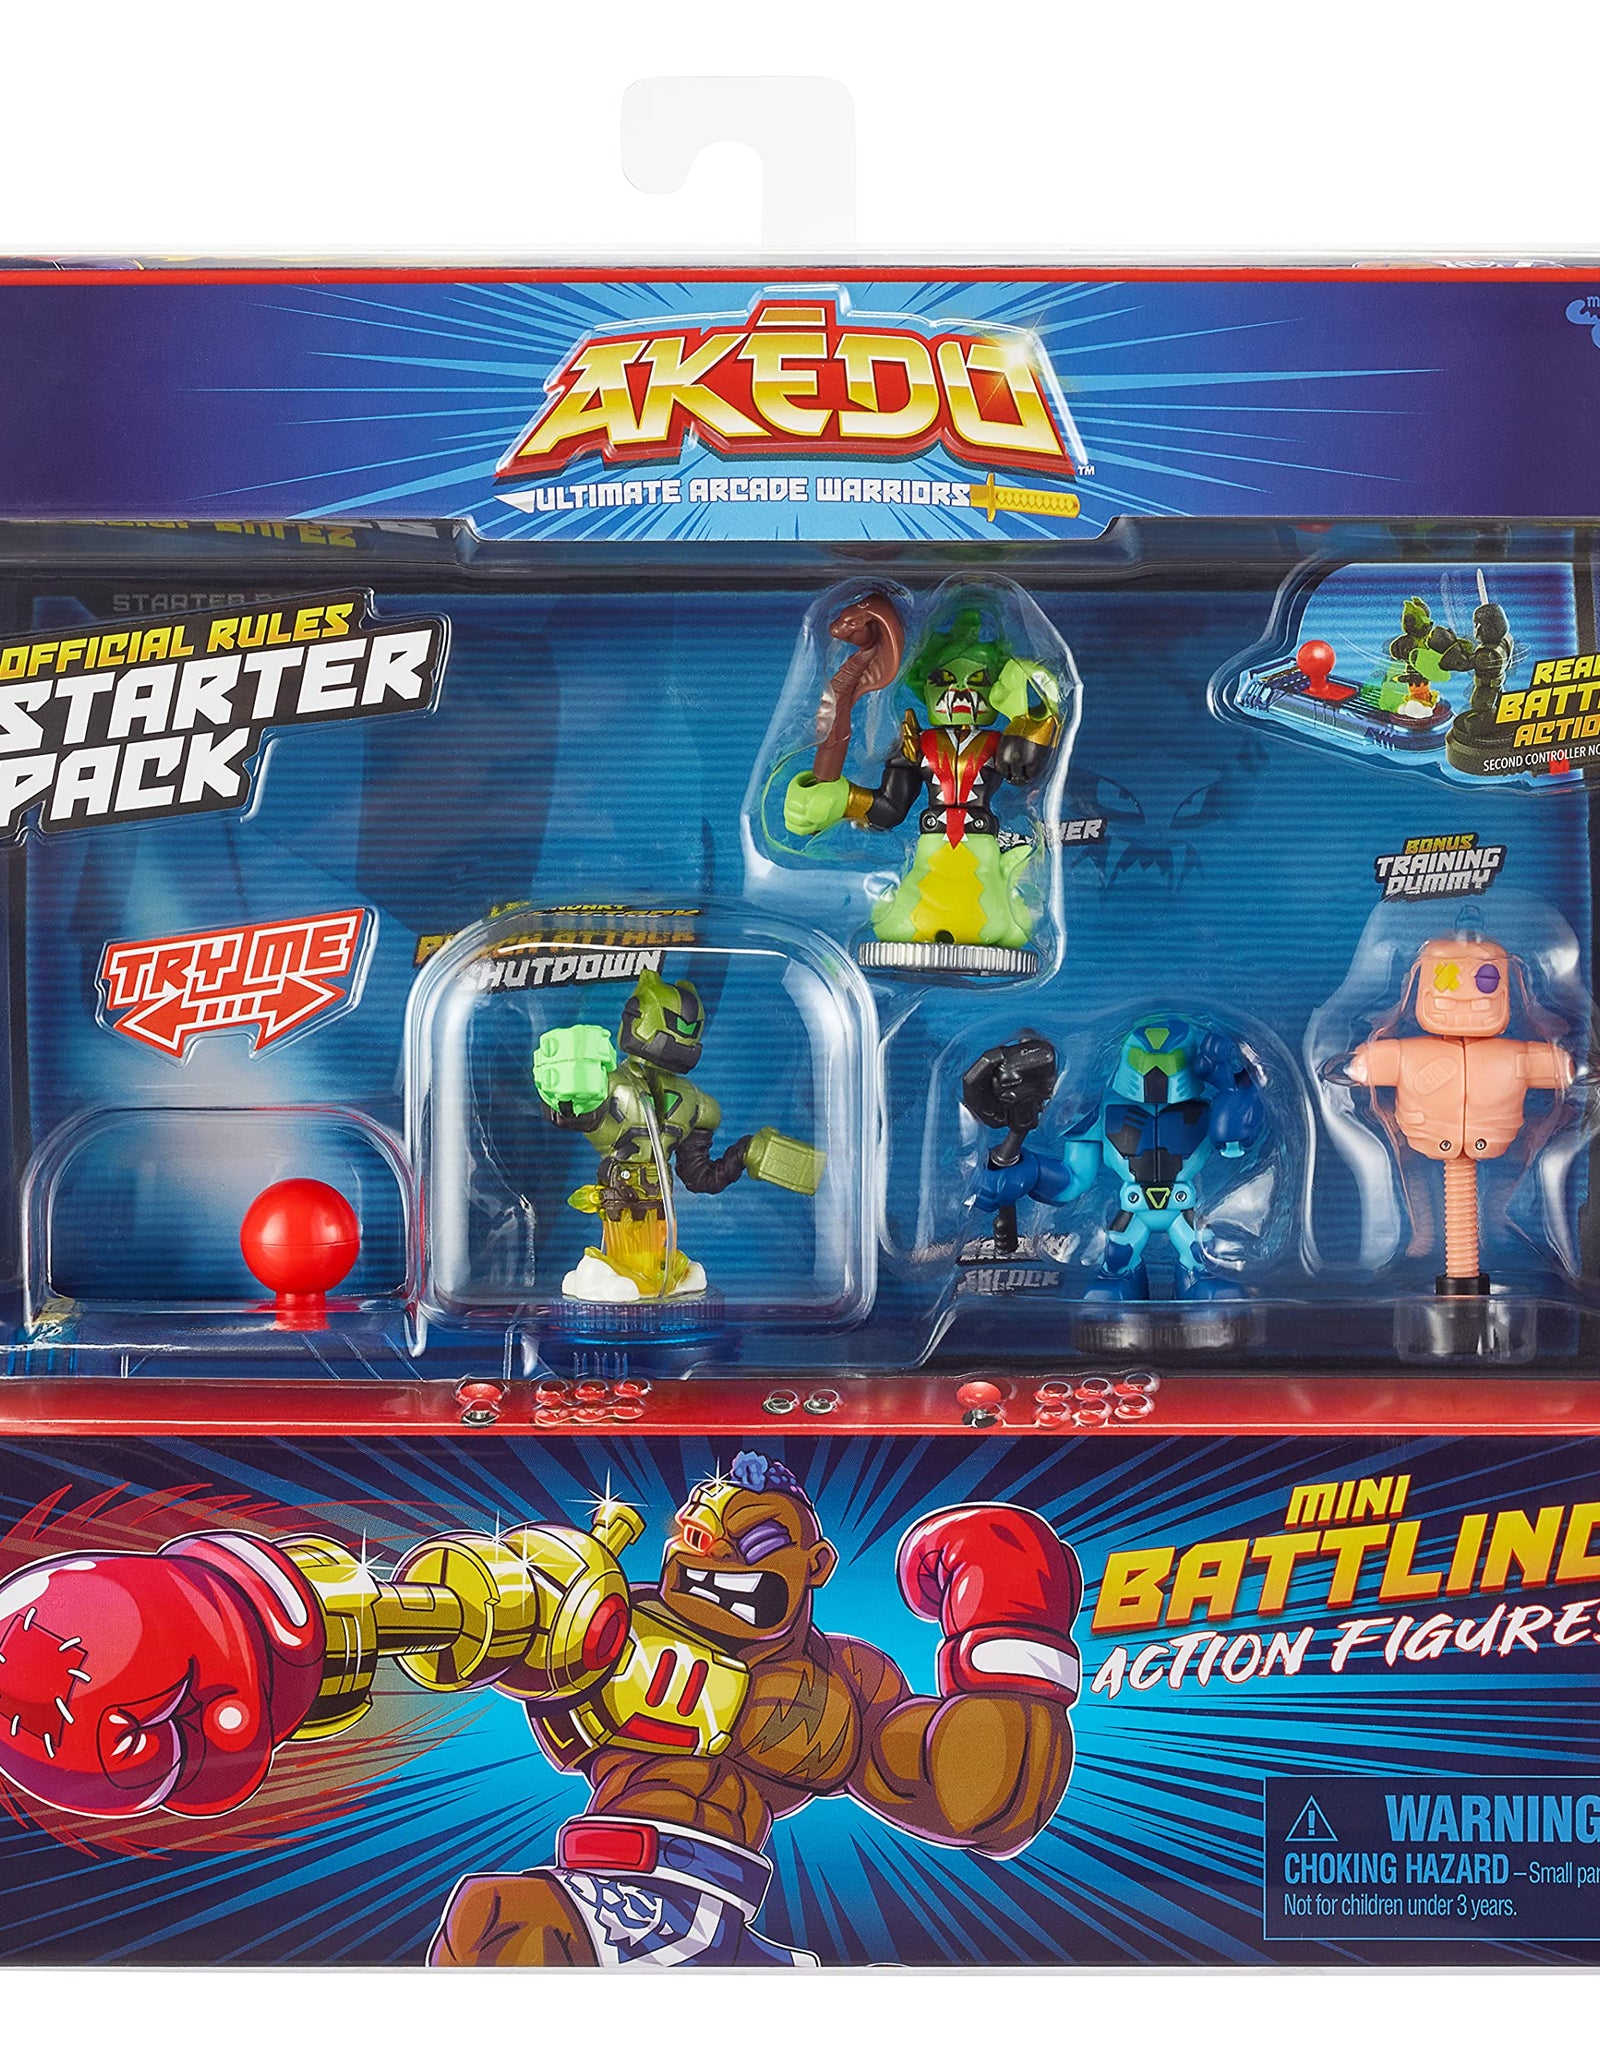 Akedo Ultimate Arcade Warriors - Starter Pack & Warrior Collector Pack Bundle Pack - Mini Battling Action Figures - Ready, Fight, Split Strike! Amazon Exclusive, Multicolor (14239)